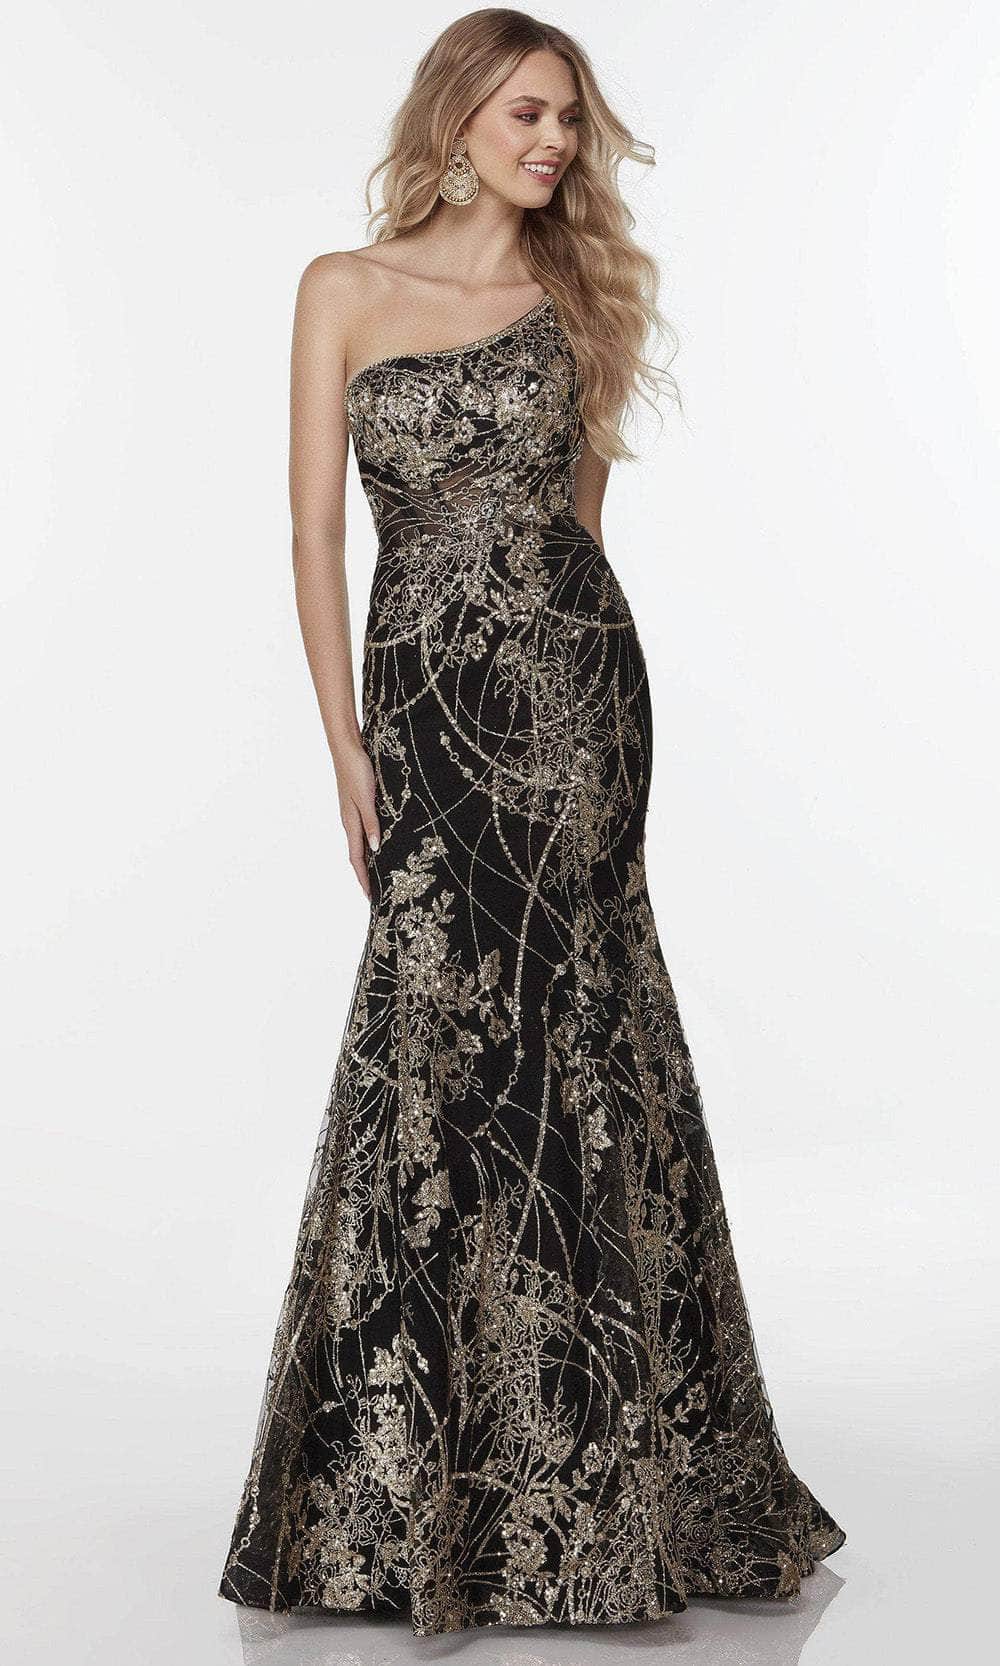 Alyce Paris 61223 - Sleeveless Asymmetric Evening Dress Special Occasion Dress 000 / Black-Gold